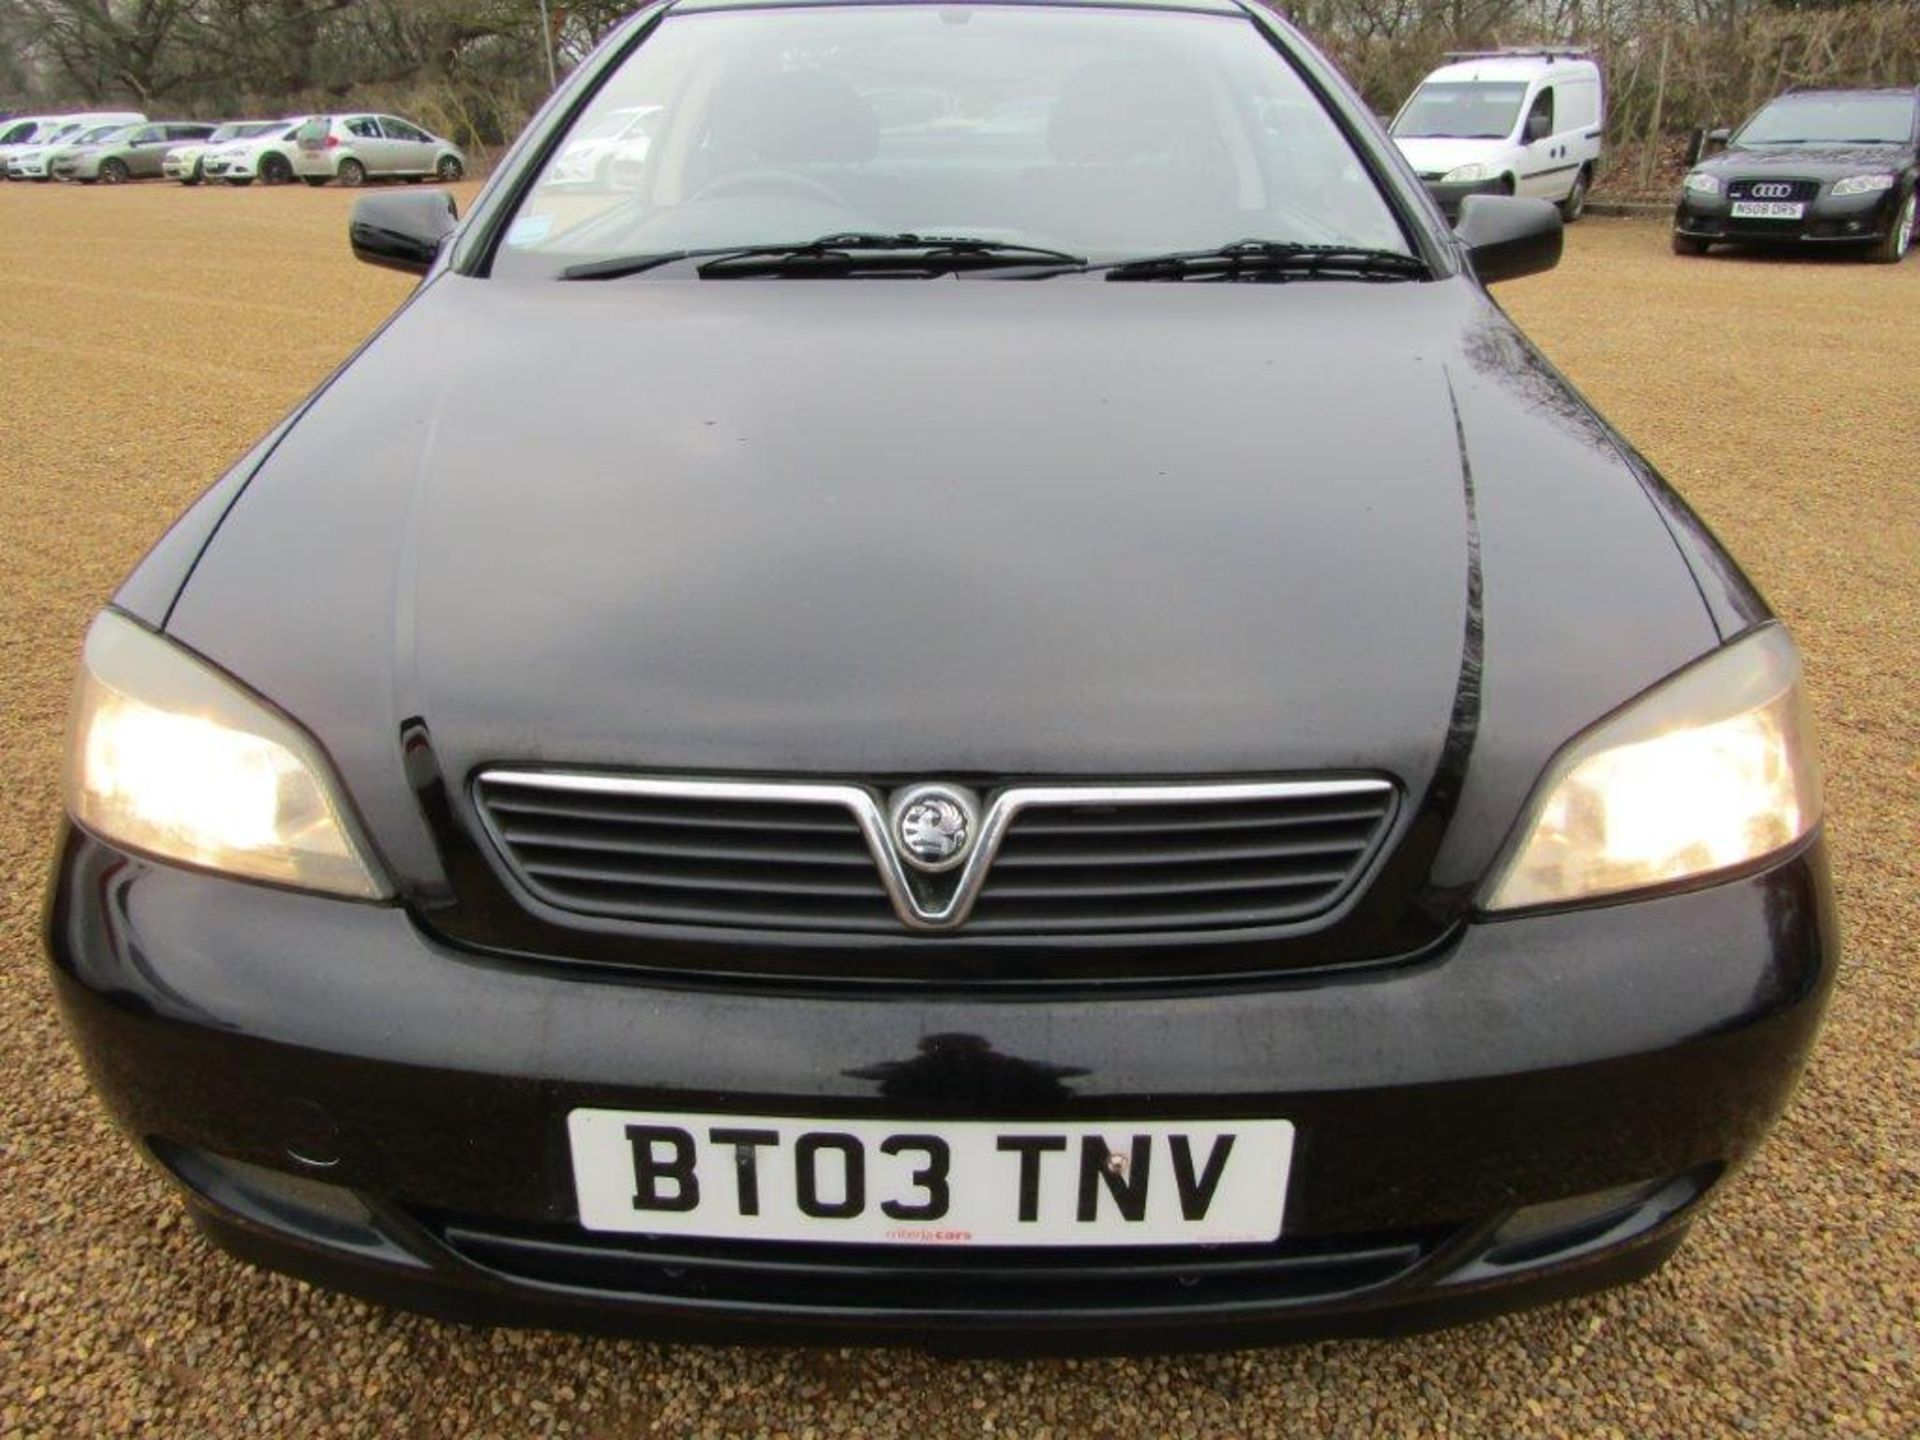 03 03 Vauxhall Astra 16V Bertone - Image 3 of 20